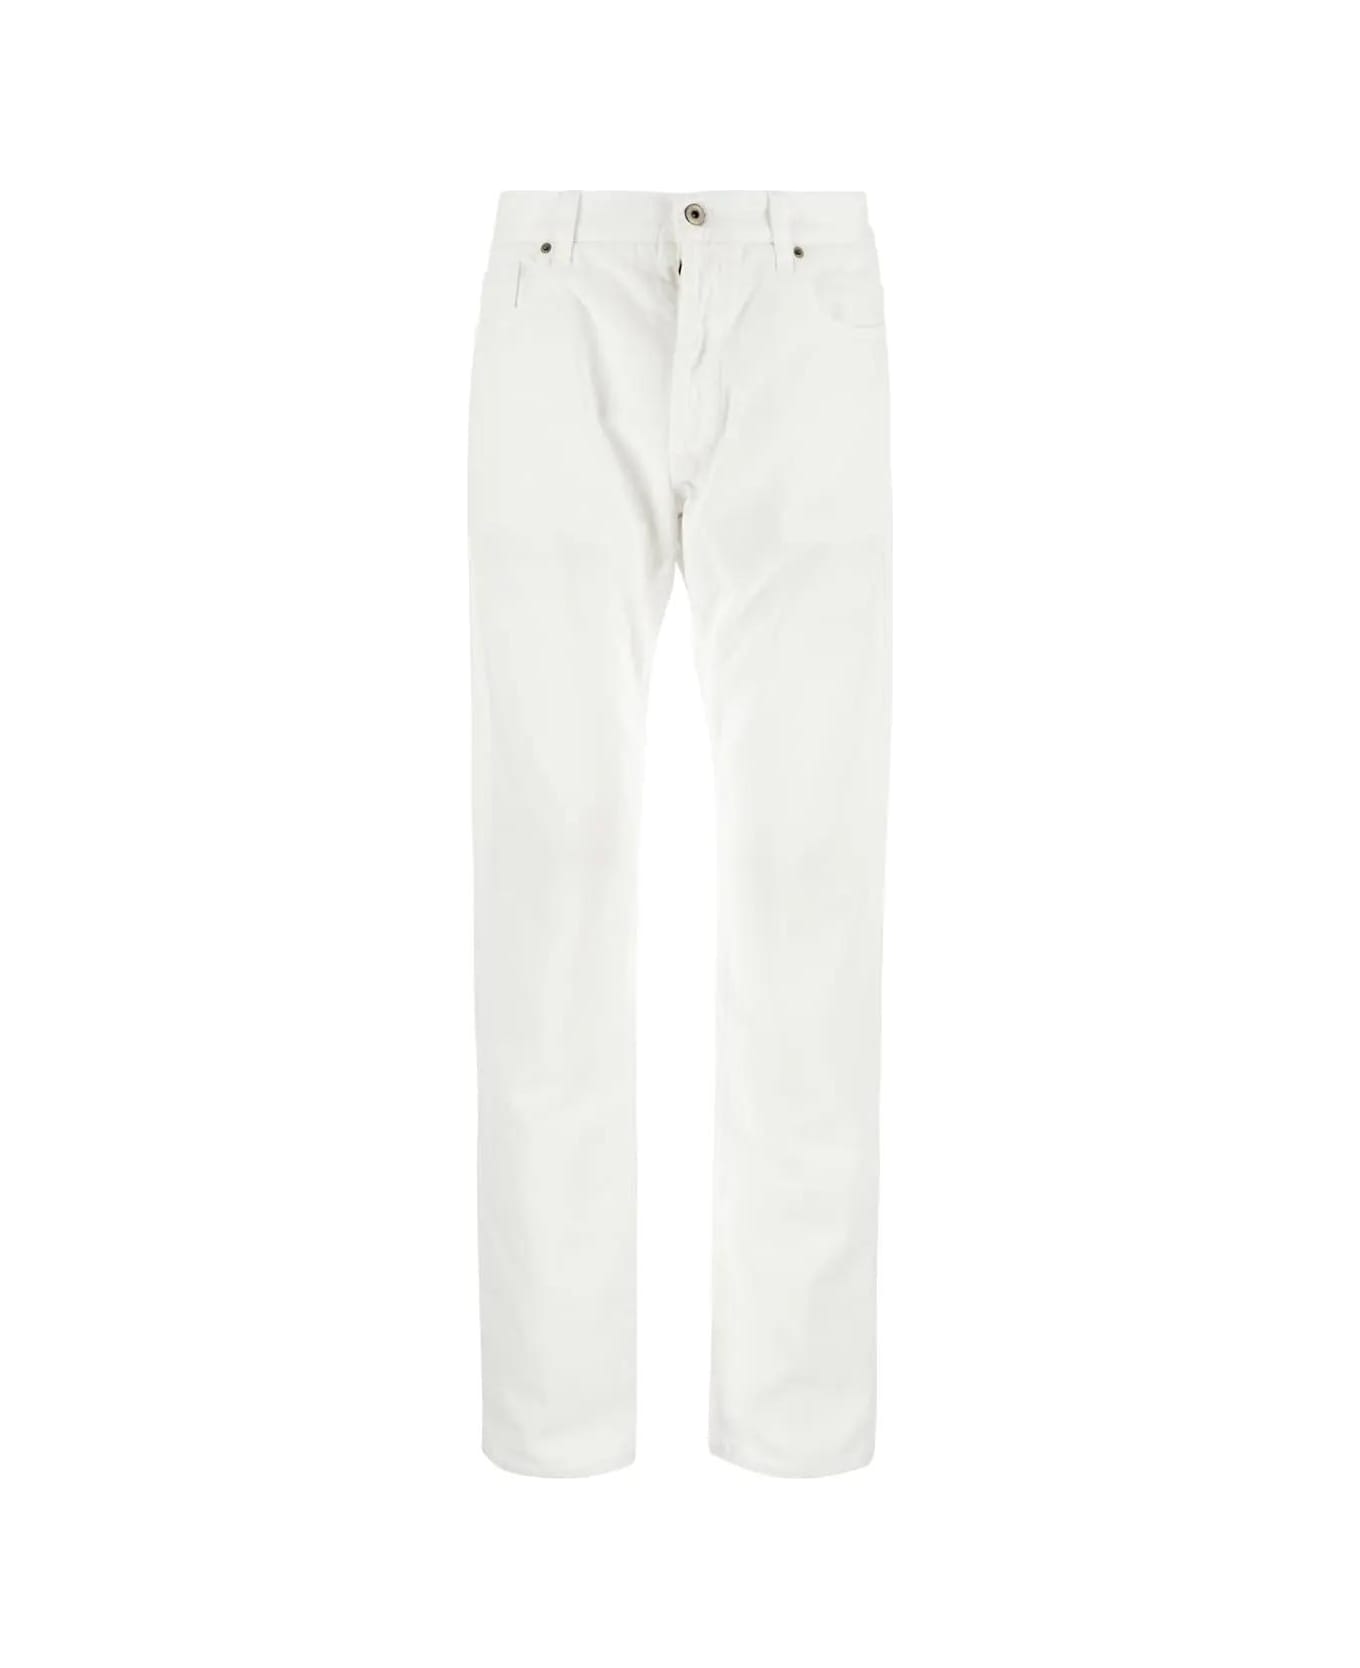 14 Bros Cheswick Jeans - White ボトムス